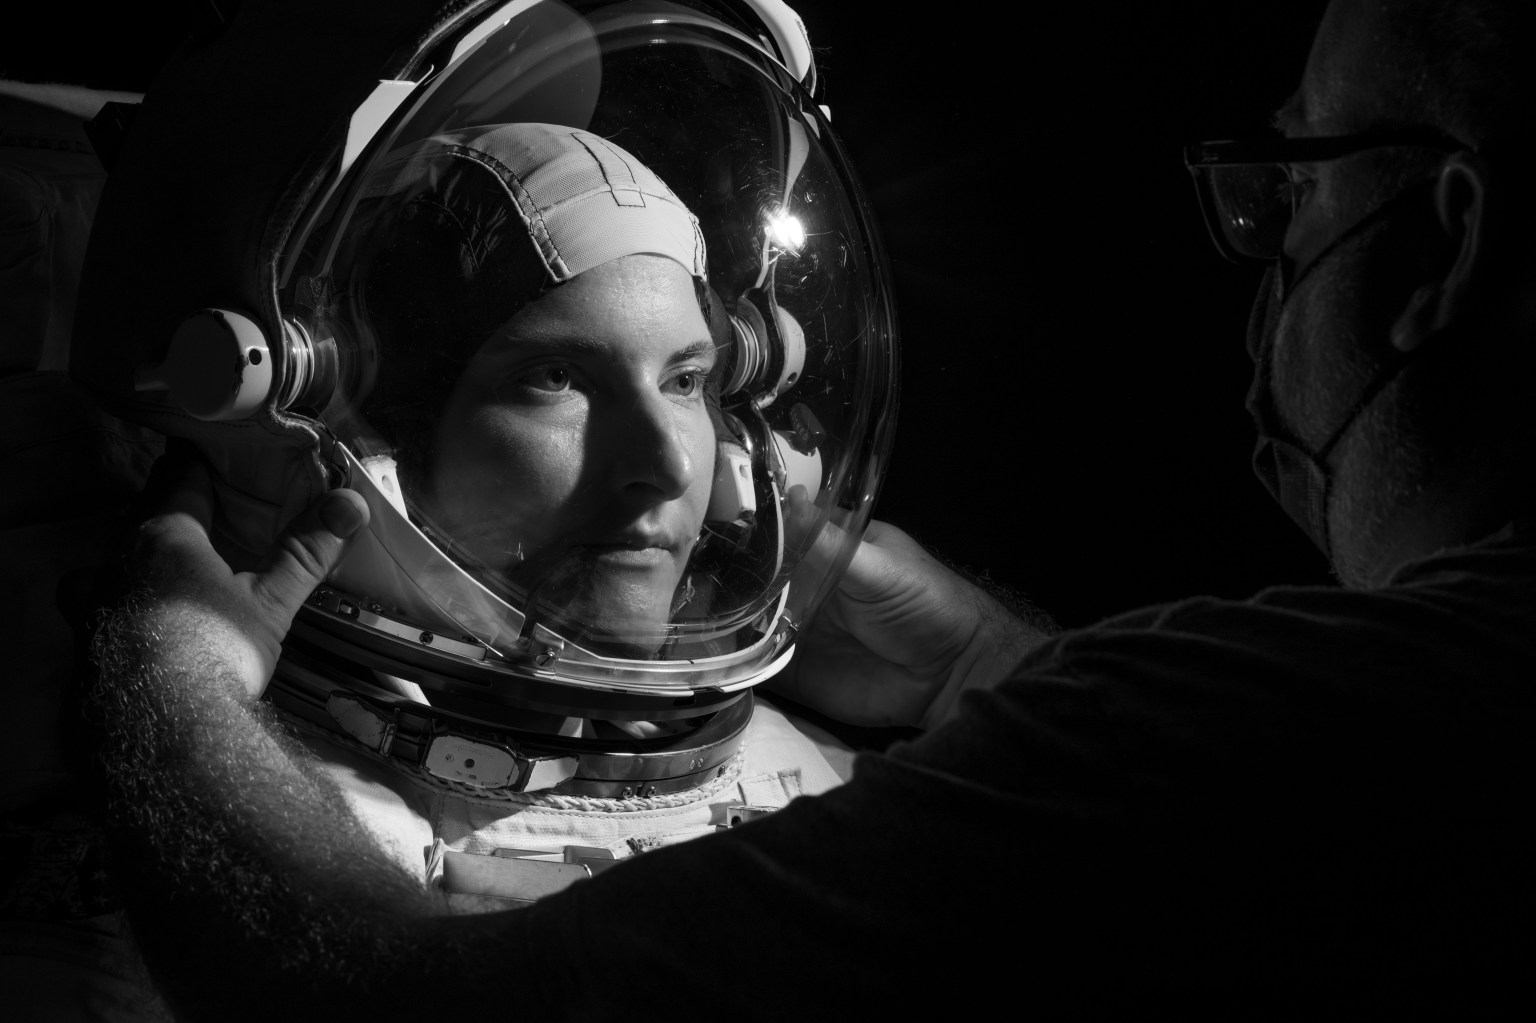 Official NASA Portrait of astronaut Kayla Barron